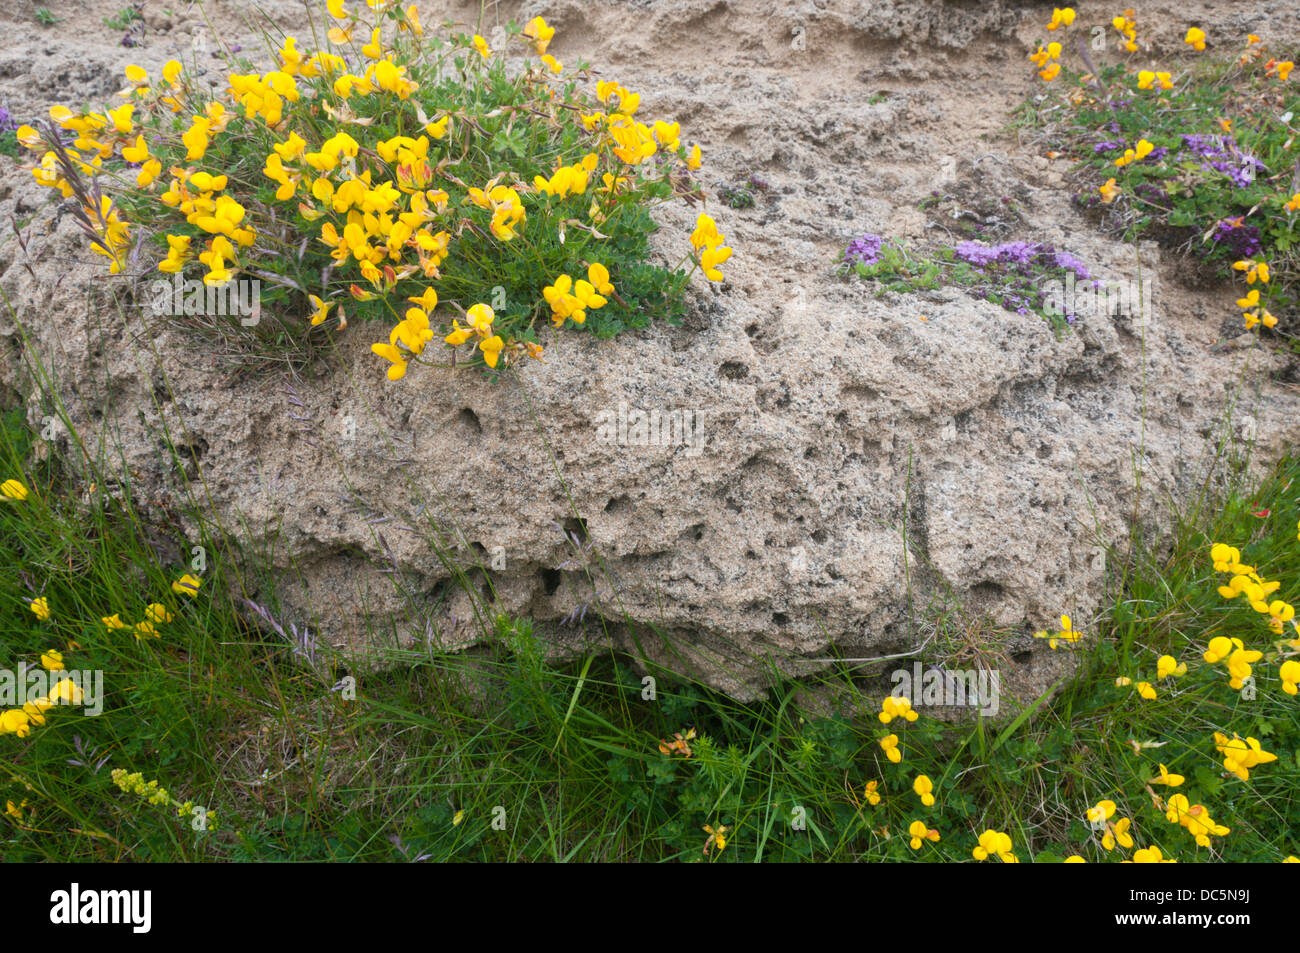 Birdsfoot trefoil growing on a deposit of Aeolianite, or wind-blown sedimentary rocks, at Aikerness on Mainland, Orkney. Stock Photo